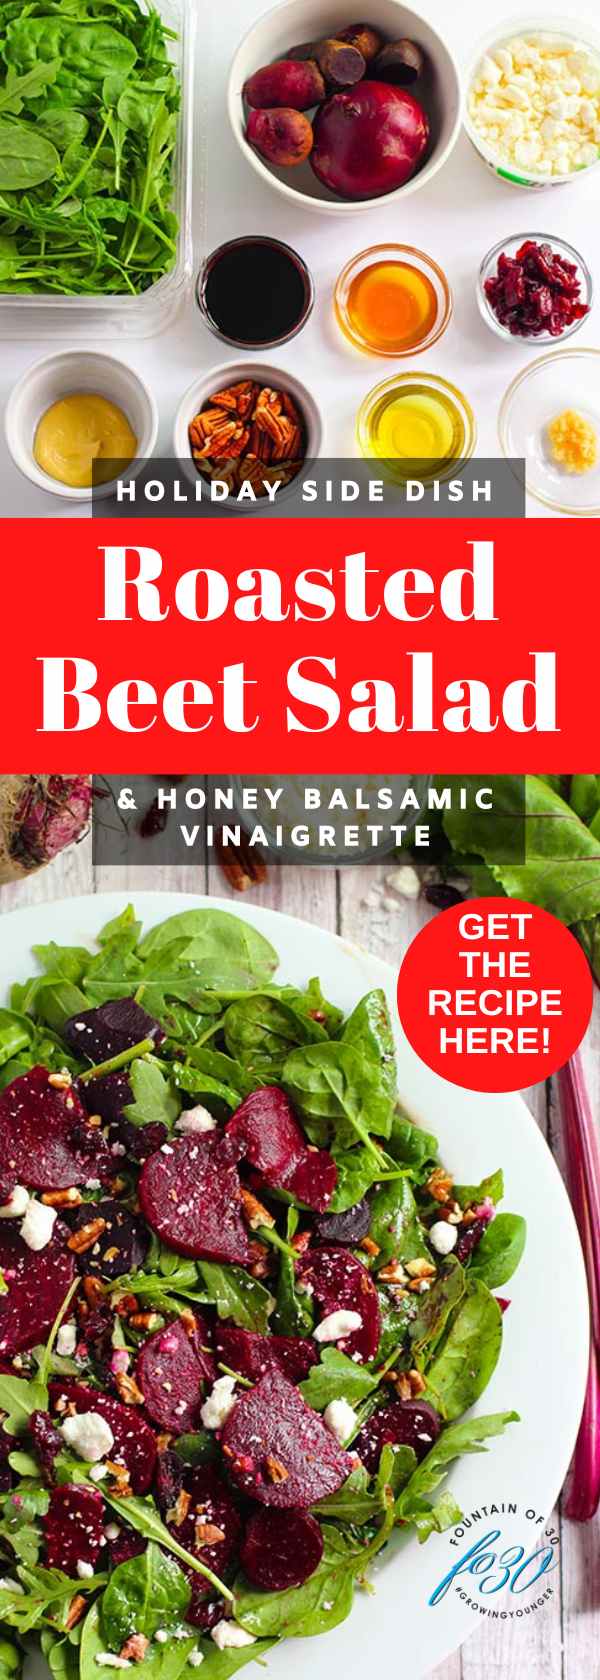 beet salad and balsamic vinaigrette recipe fountainof30